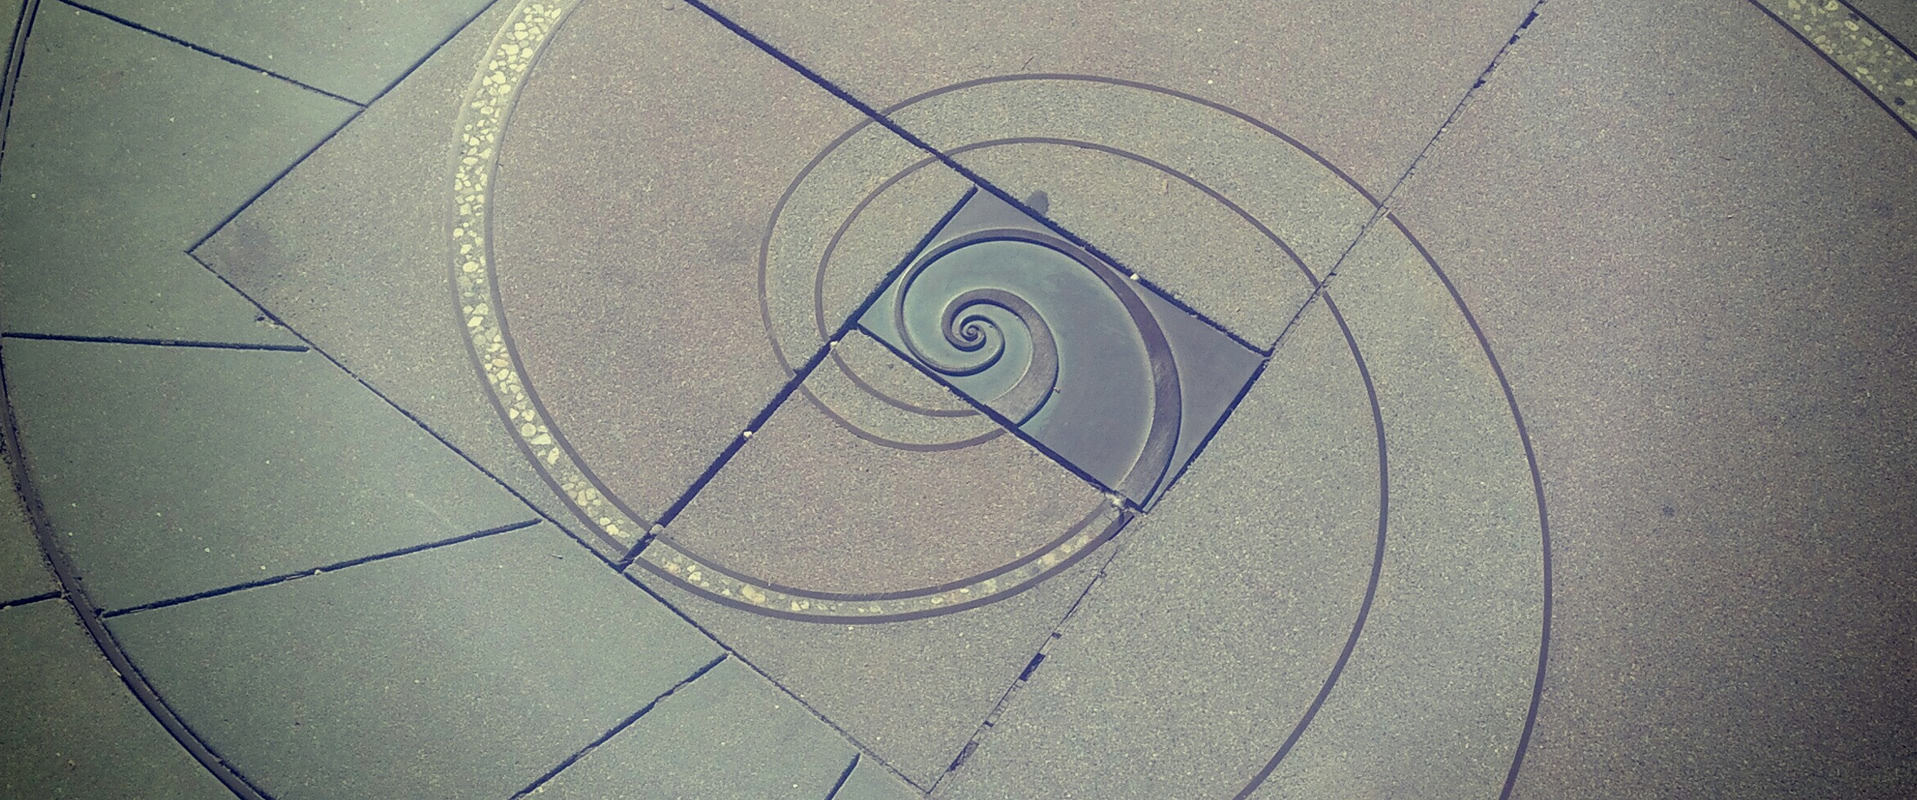 Spiral created in a sidewalk